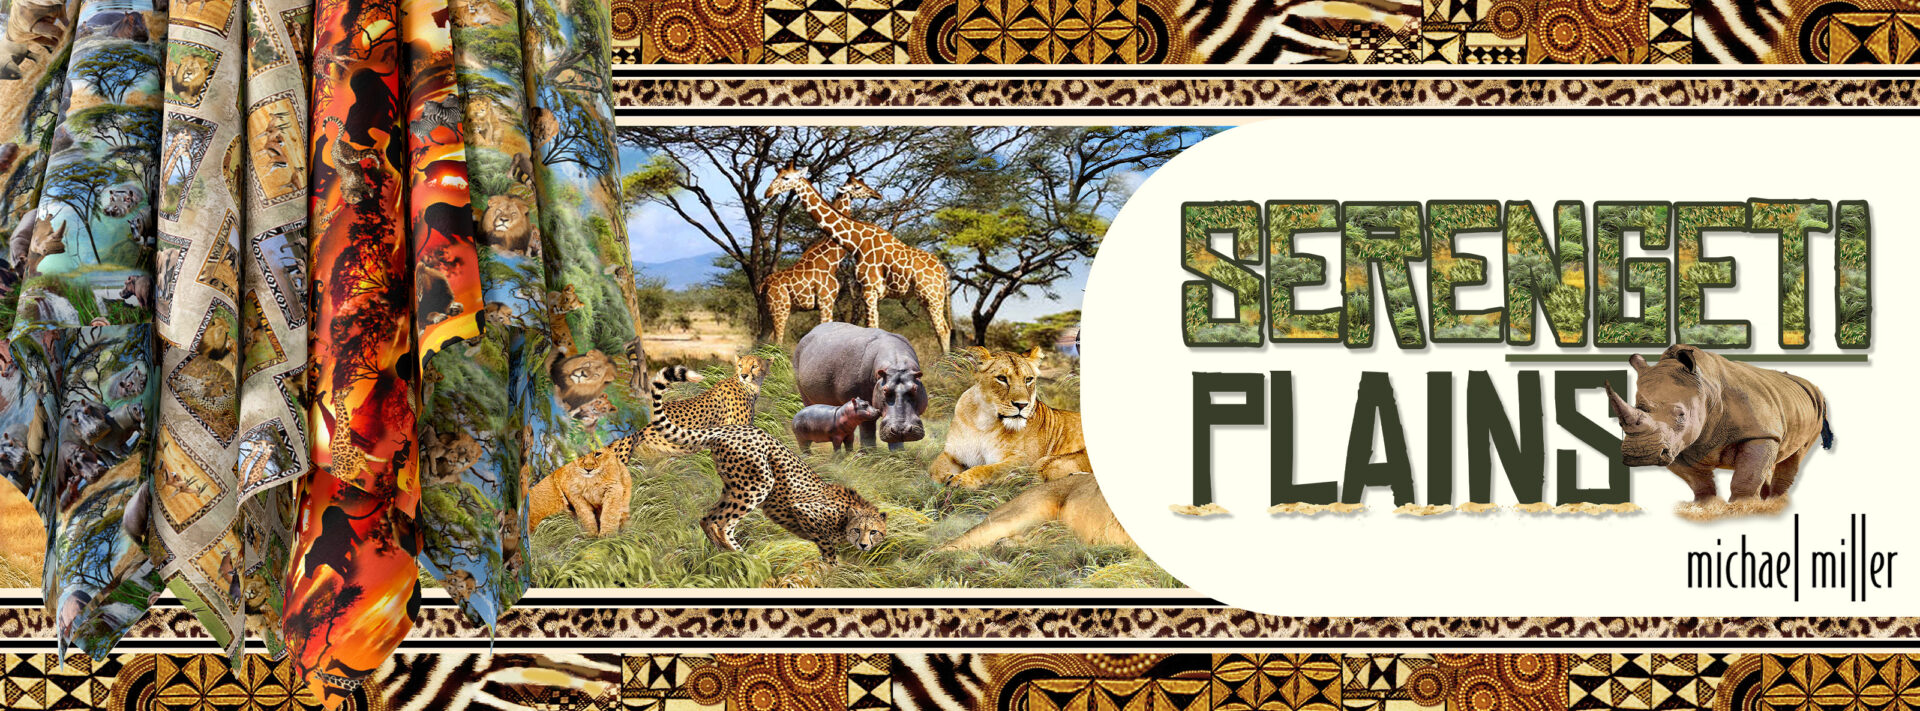 Serengeti Plains Large Website Banner